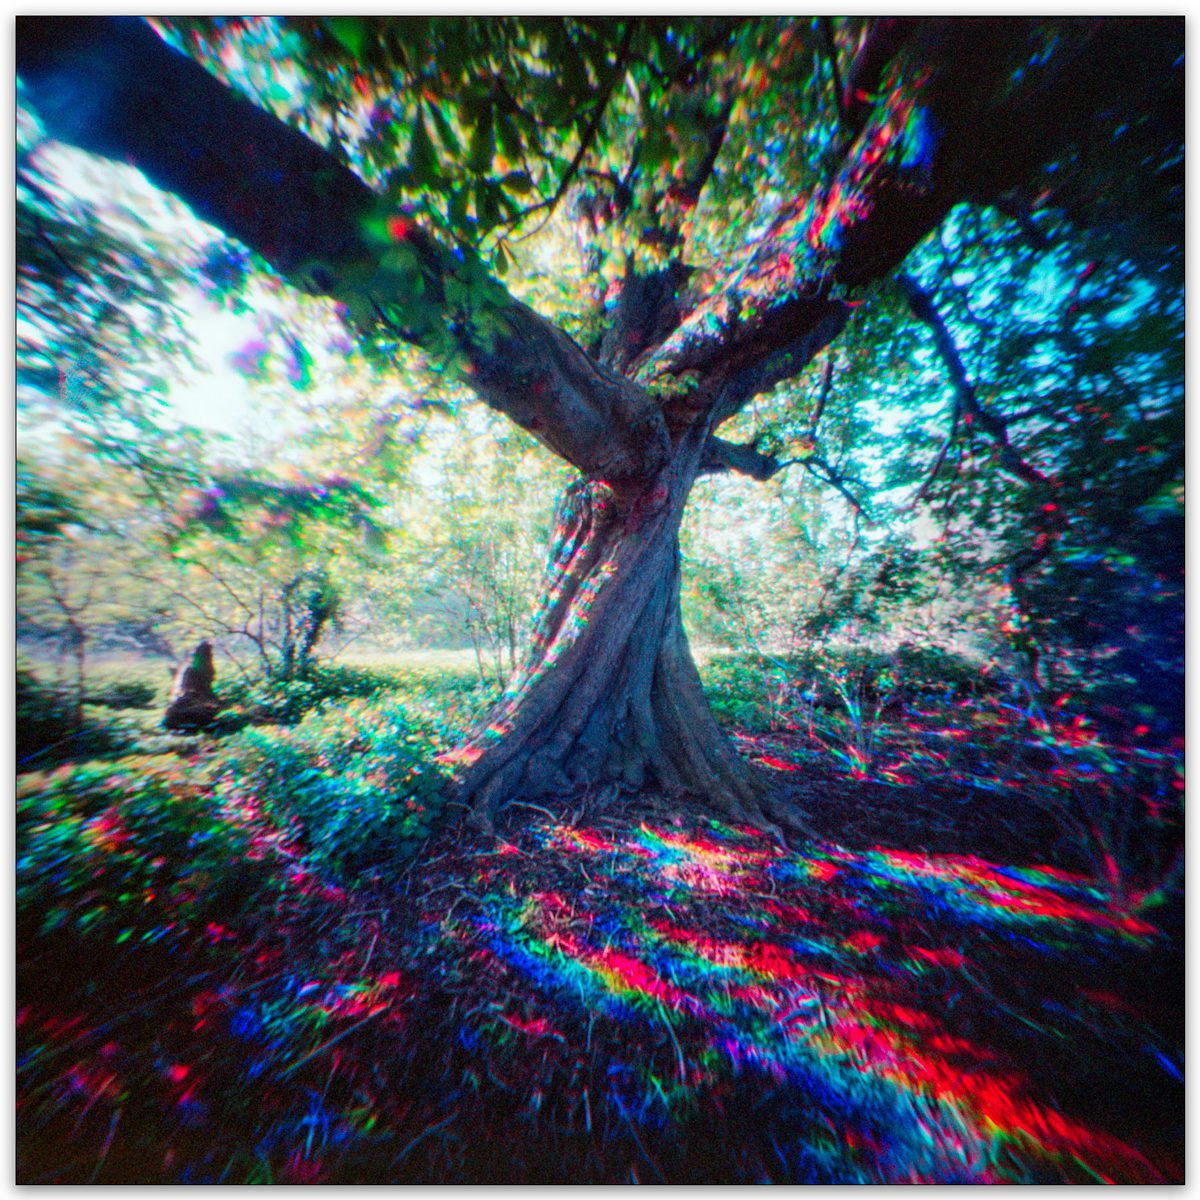 Colour photo of a tree